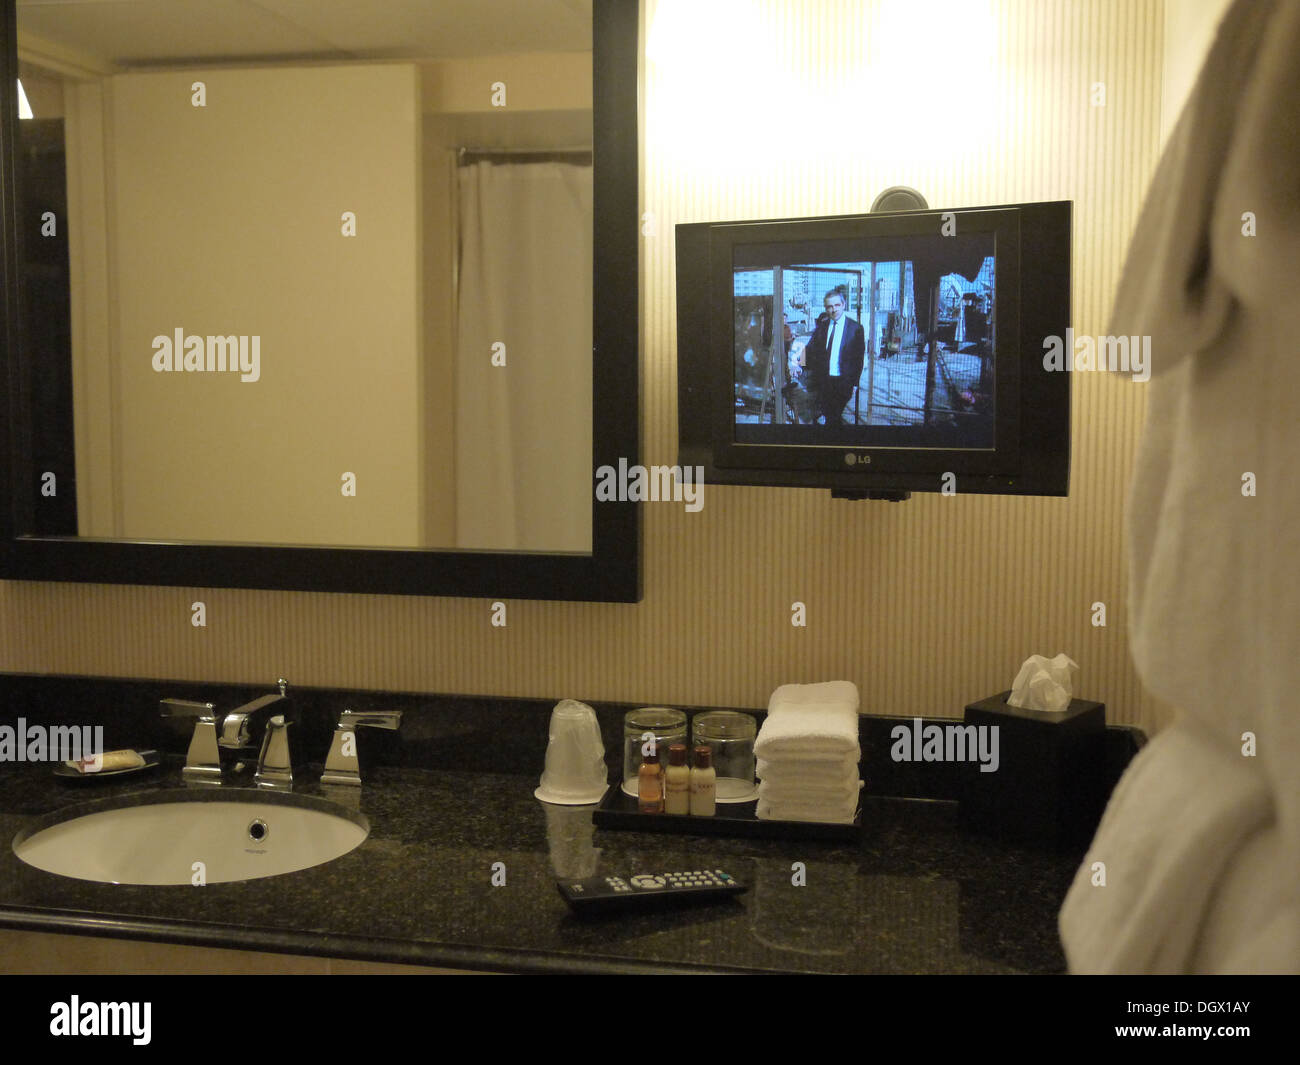 watching tv inside bathroom sheraton hotel Stock Photo